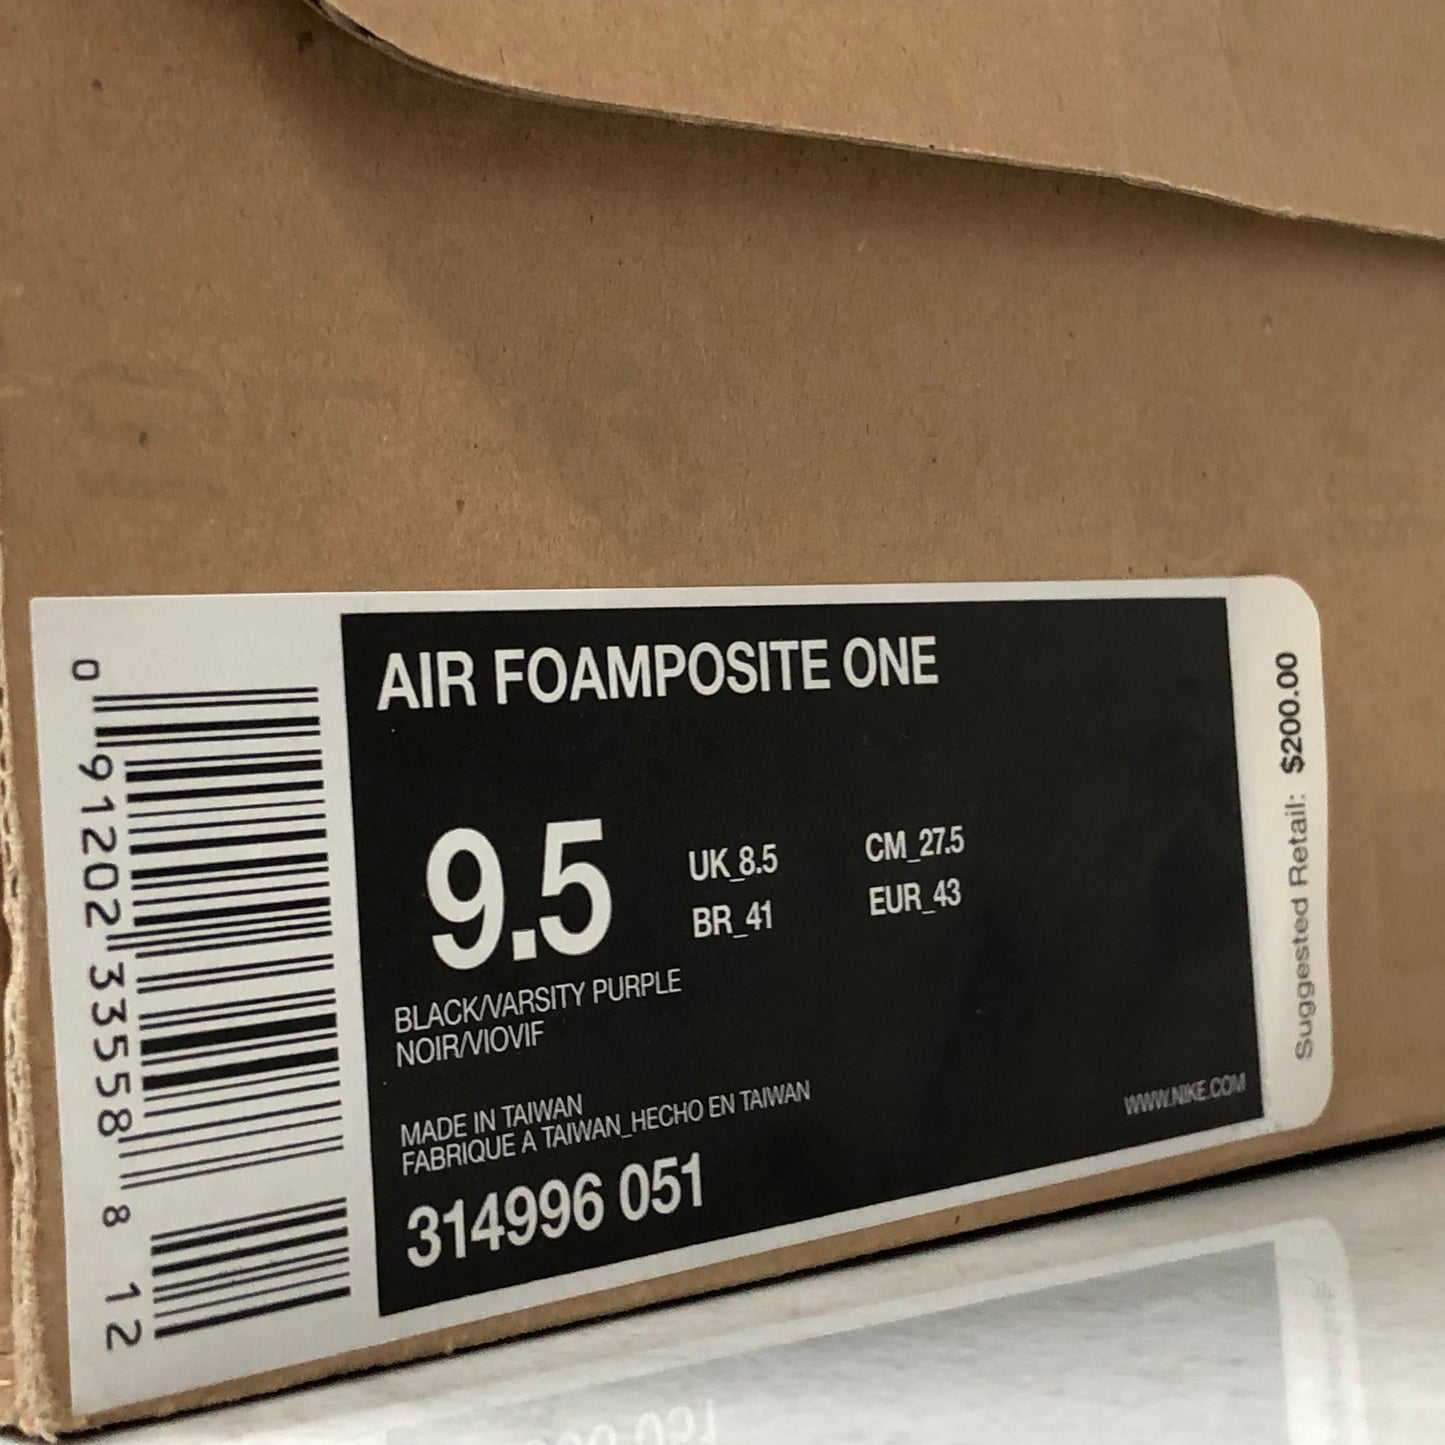 Nike Air Foamposite One Aubergine Taille 9.5 Noir 314996 051